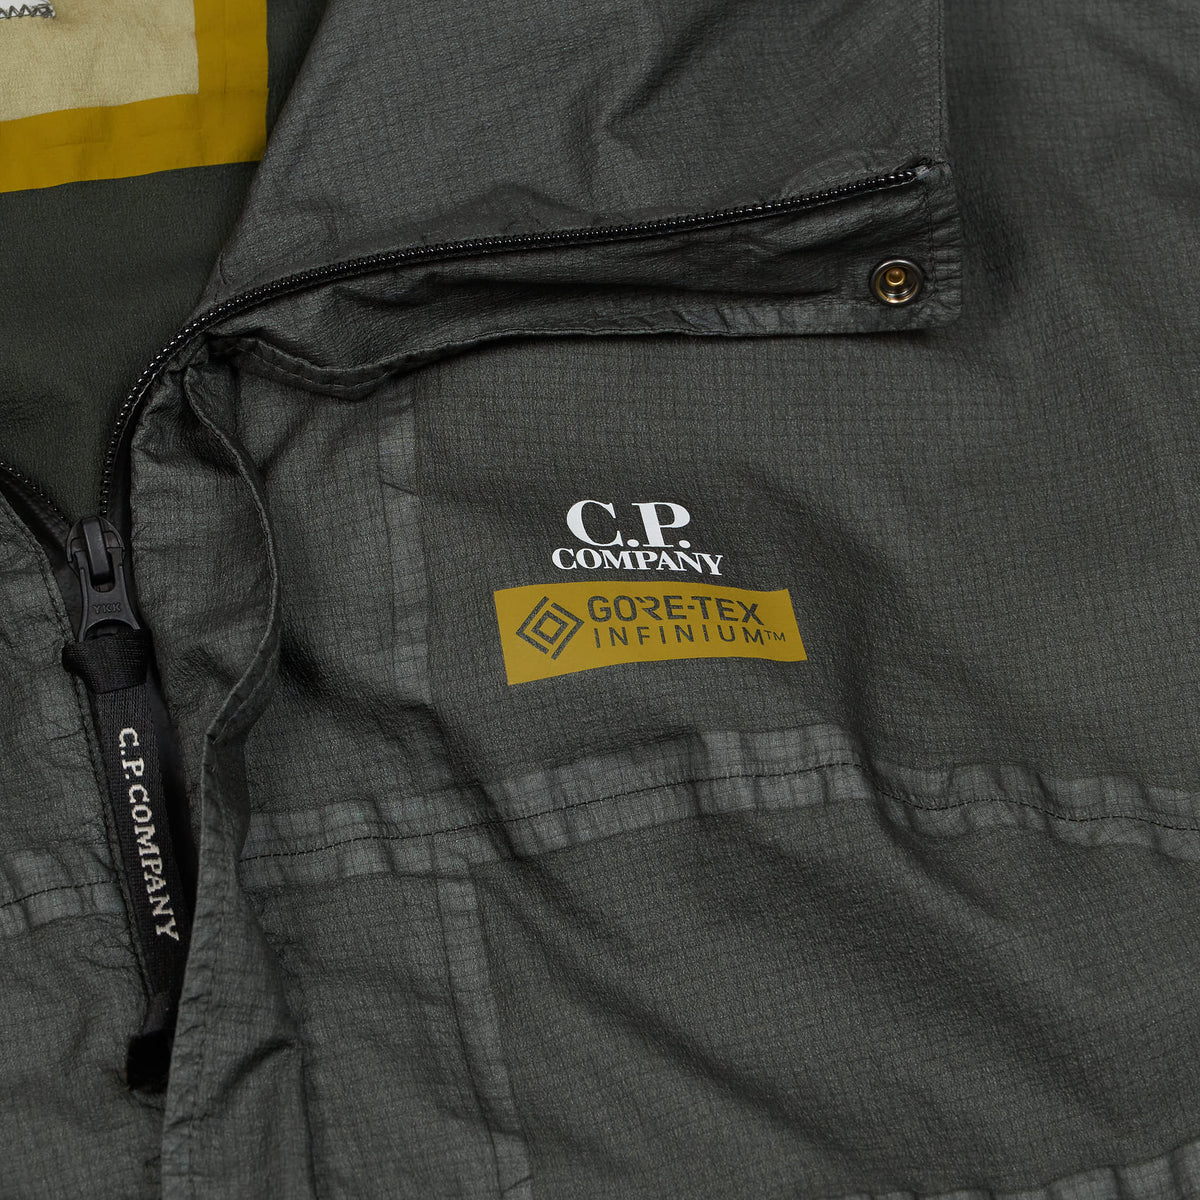 GORE-TEX Brand Waterproof Drawstring Bag